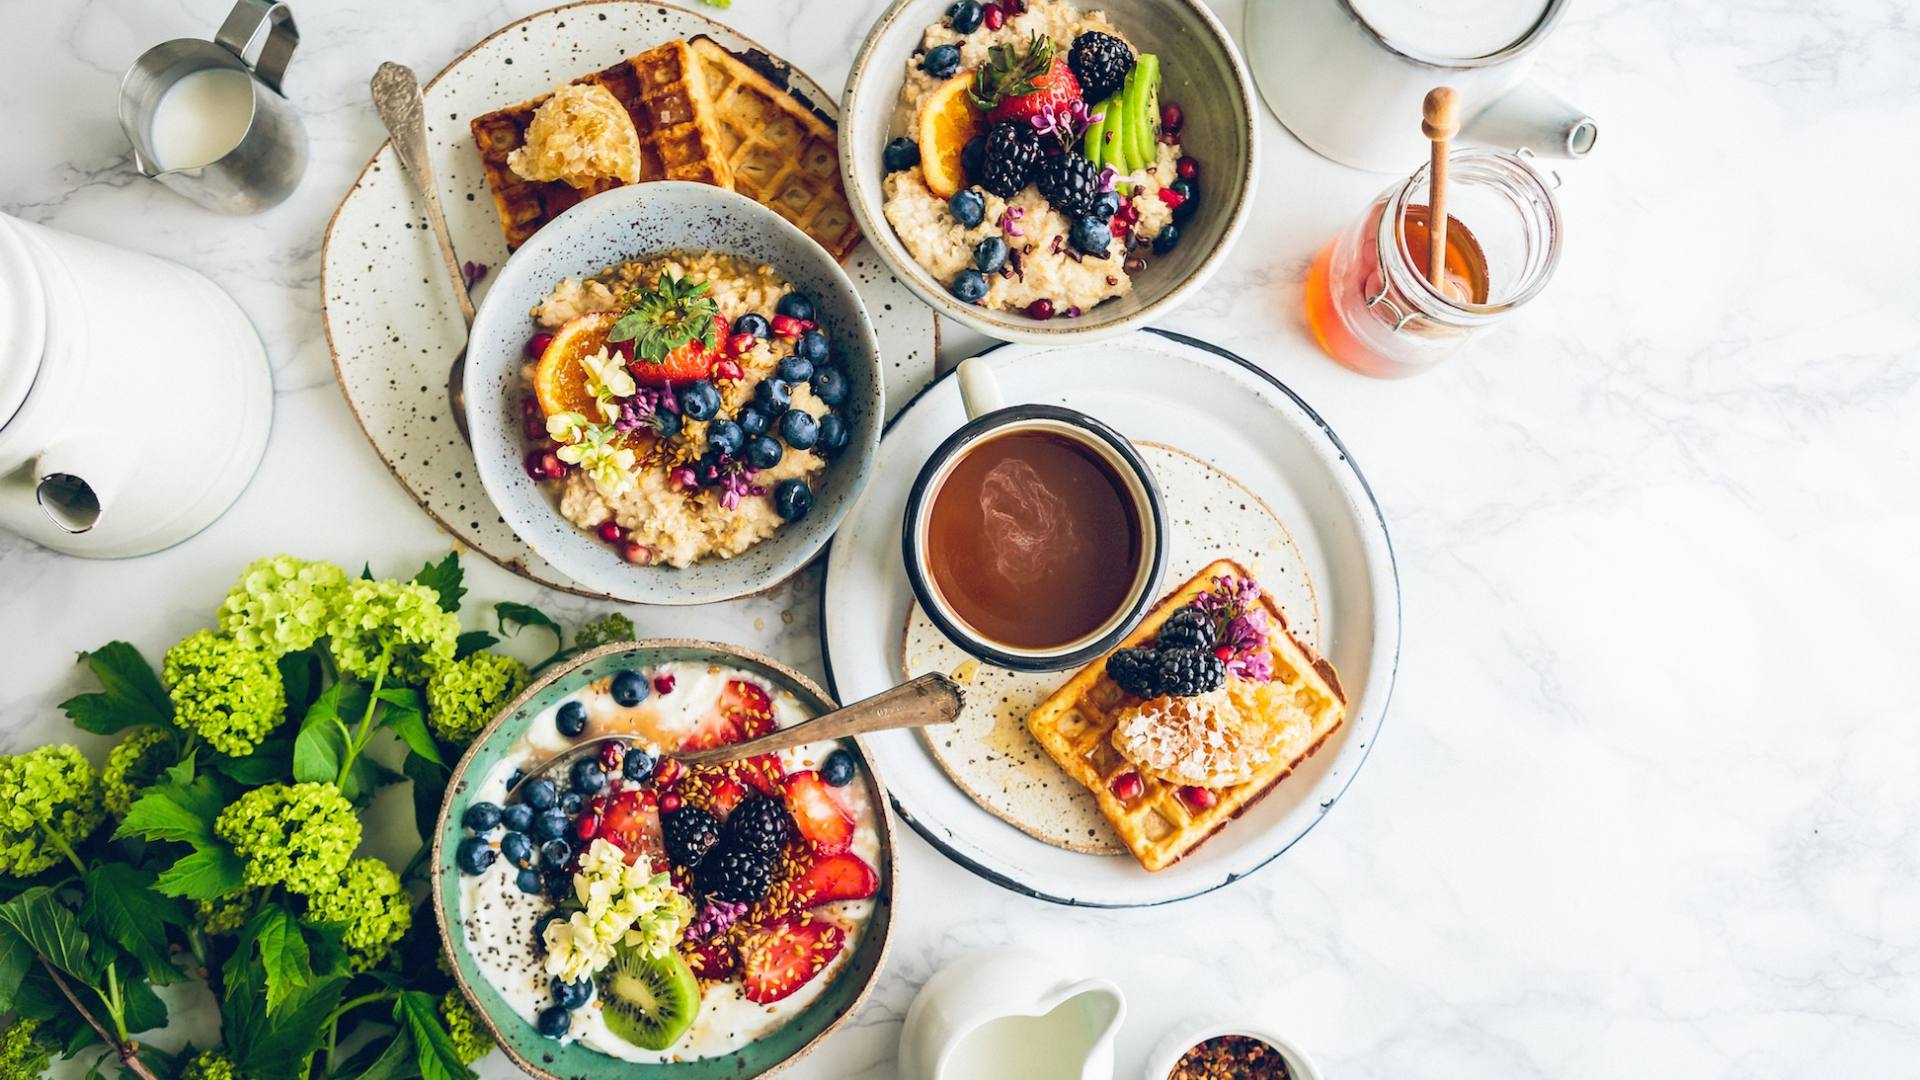 real food like waffles, berries, yogurt, and more on a table